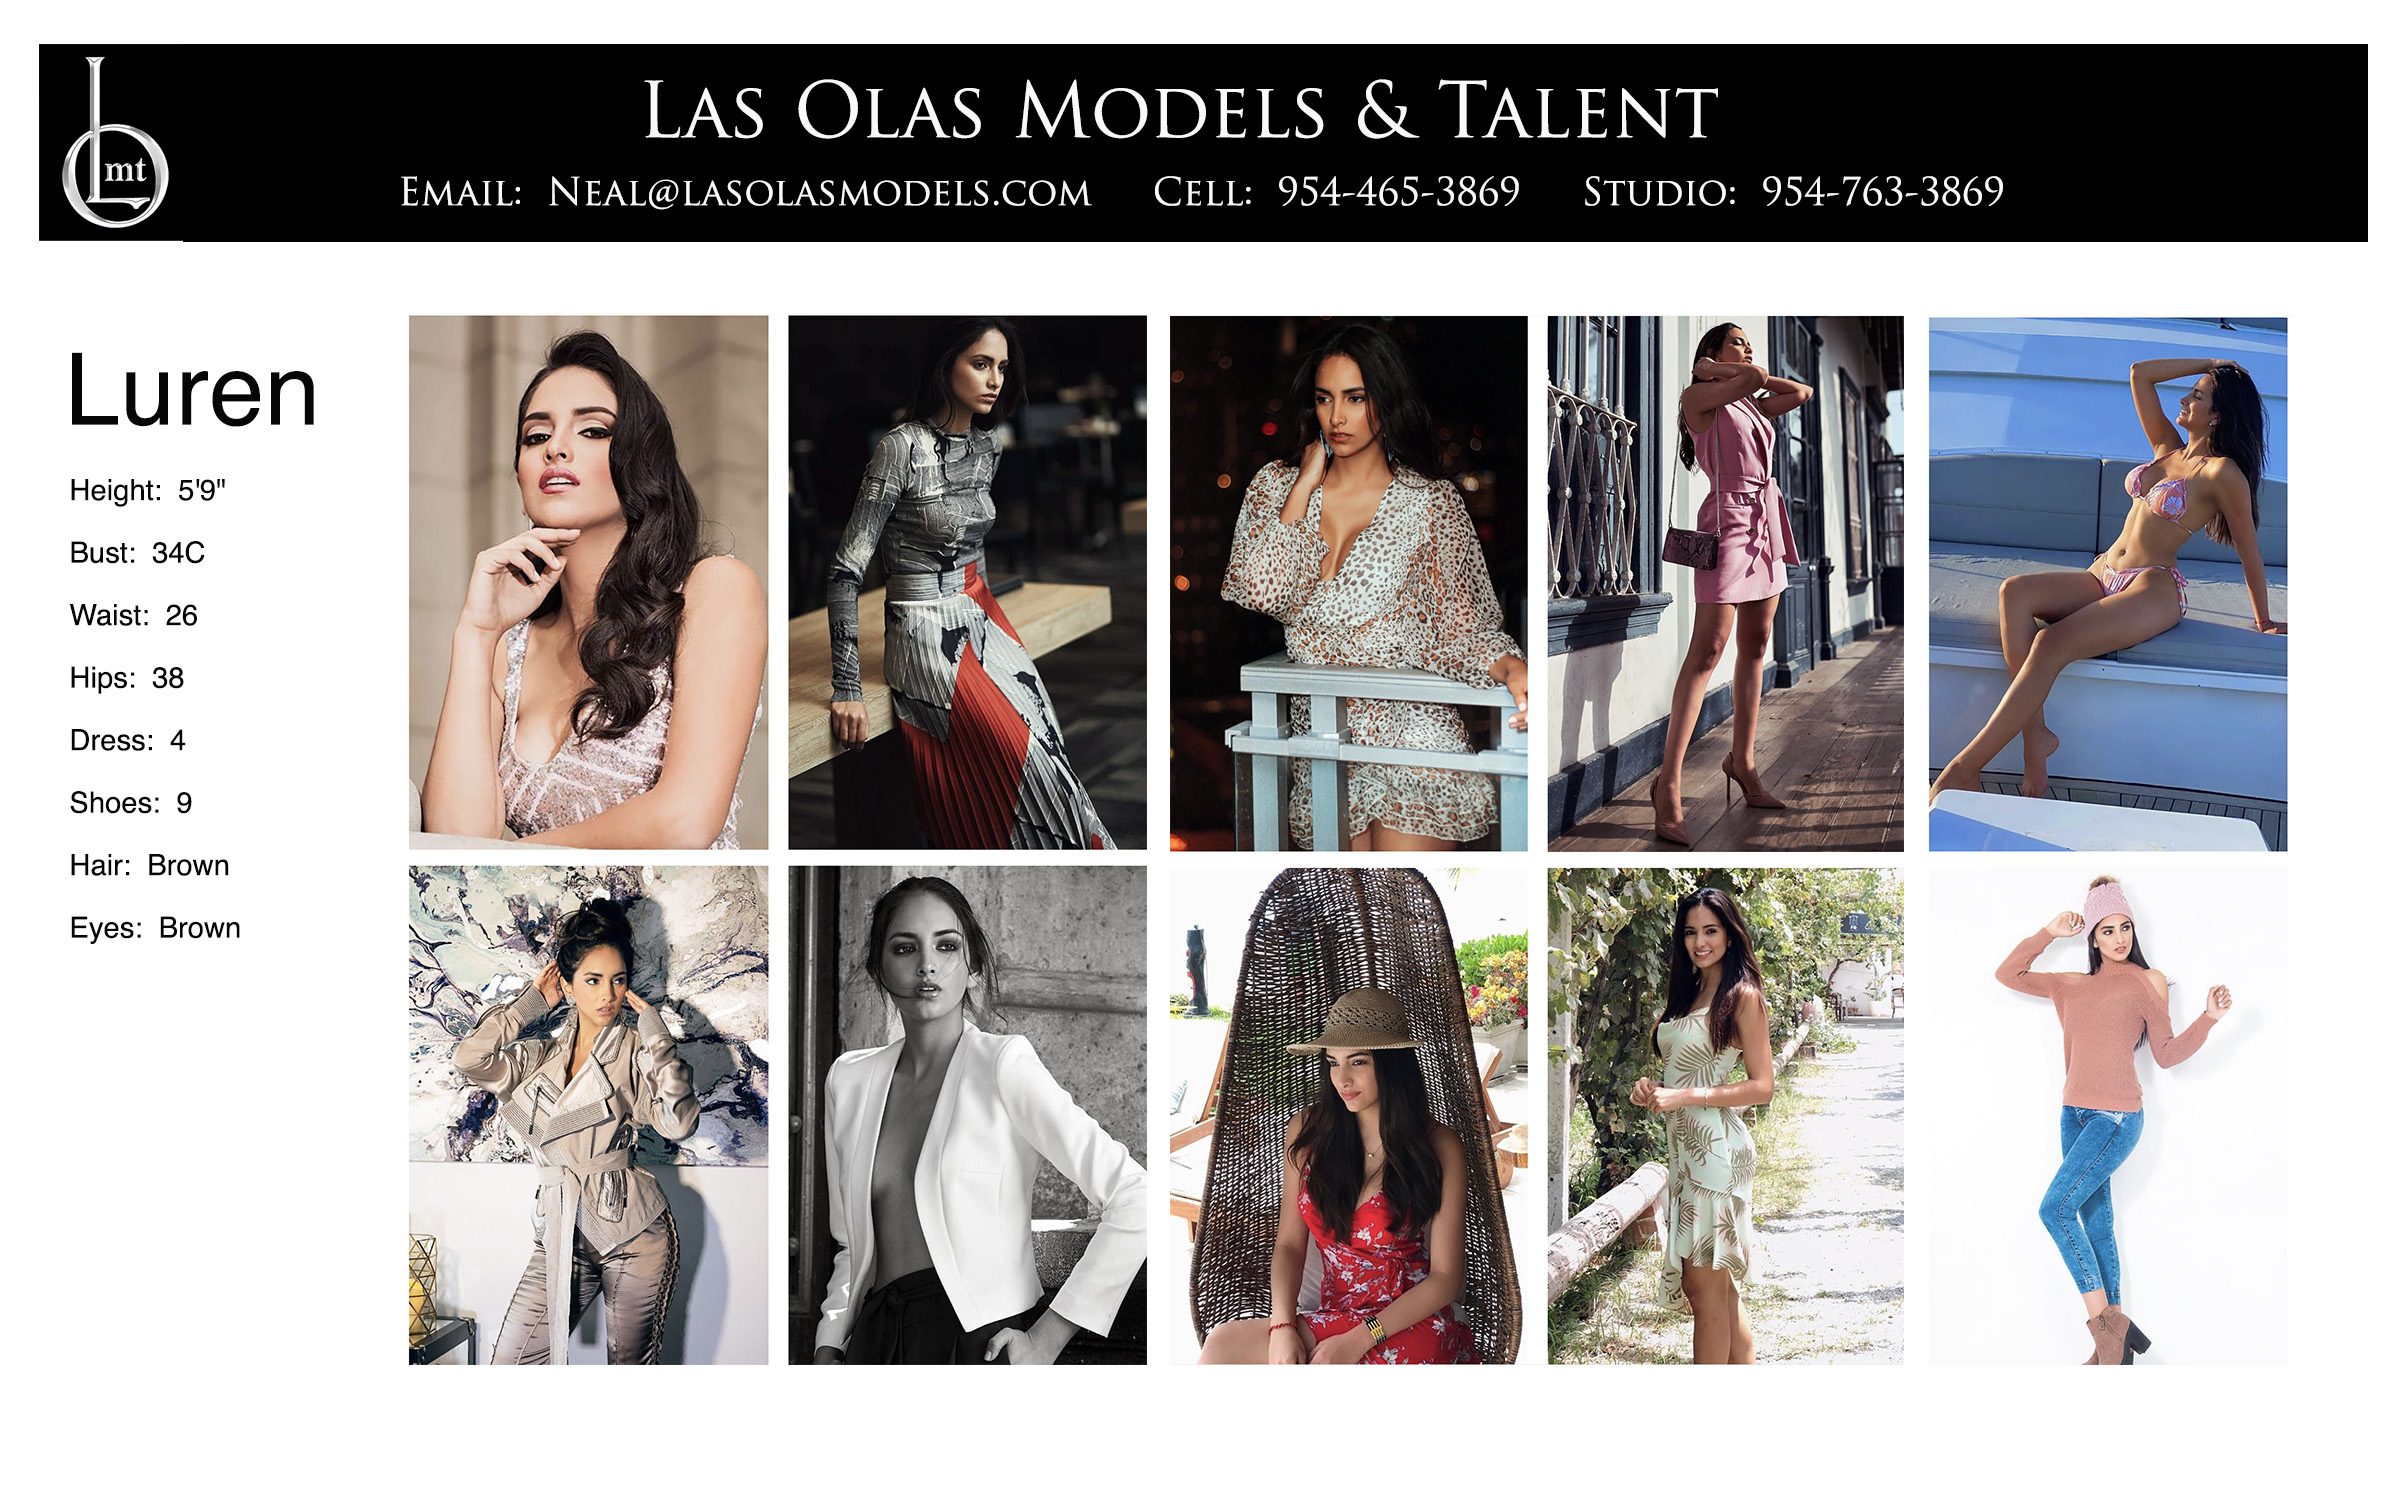 Models Fort Lauderdale Miami South Florida - Print Video Commercial Catalog - Las Olas Models & Talent - Comp